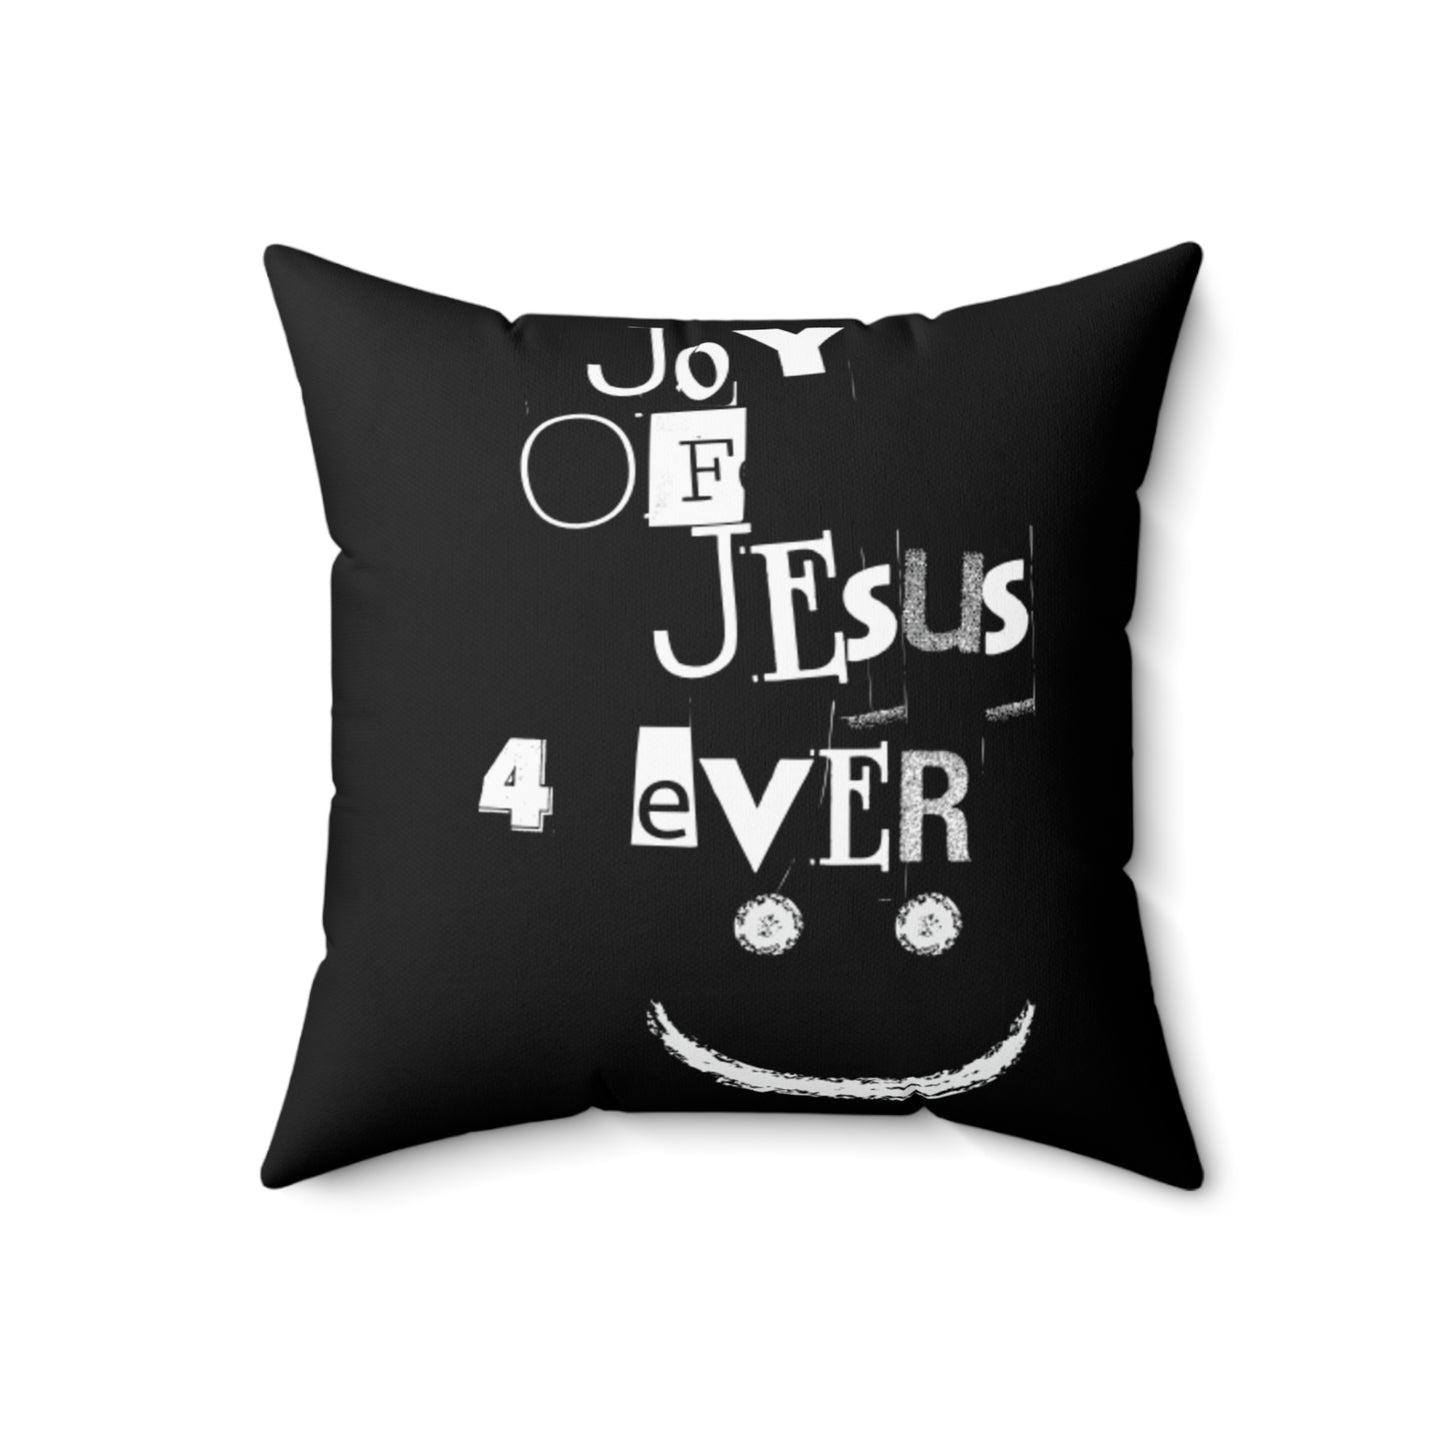 Joy of Jesus 4 Ever Spun Polyester Square Pillow